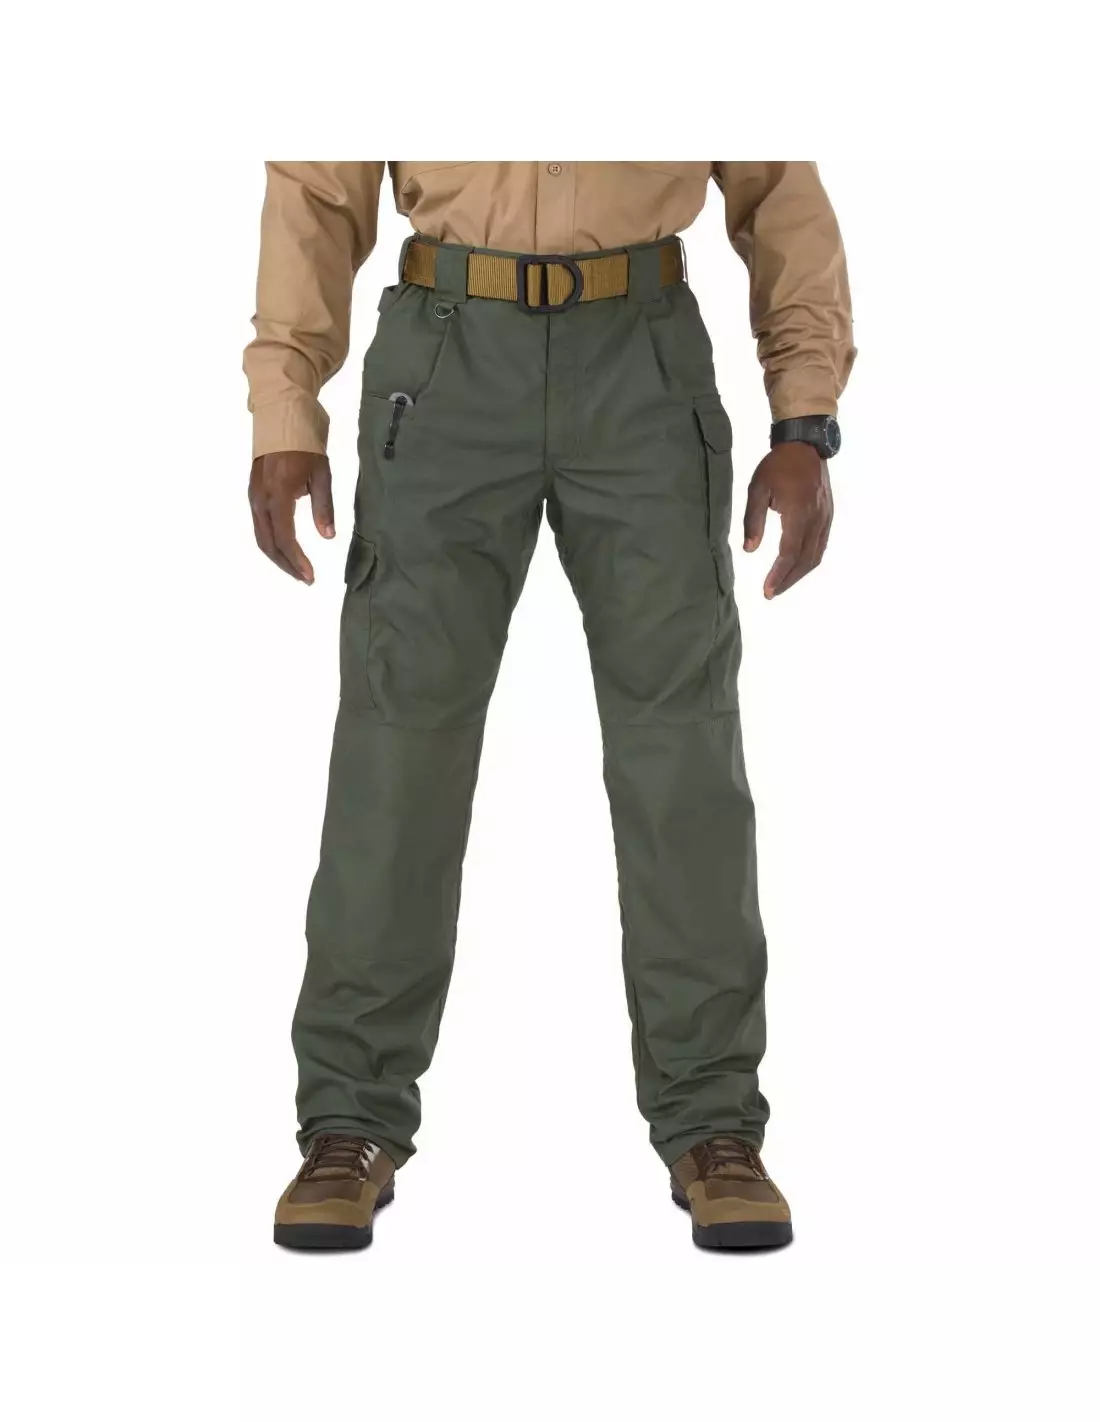 5.11, Inc. Taclite Pro Trousers / Pants - Ripstop - TDU Green